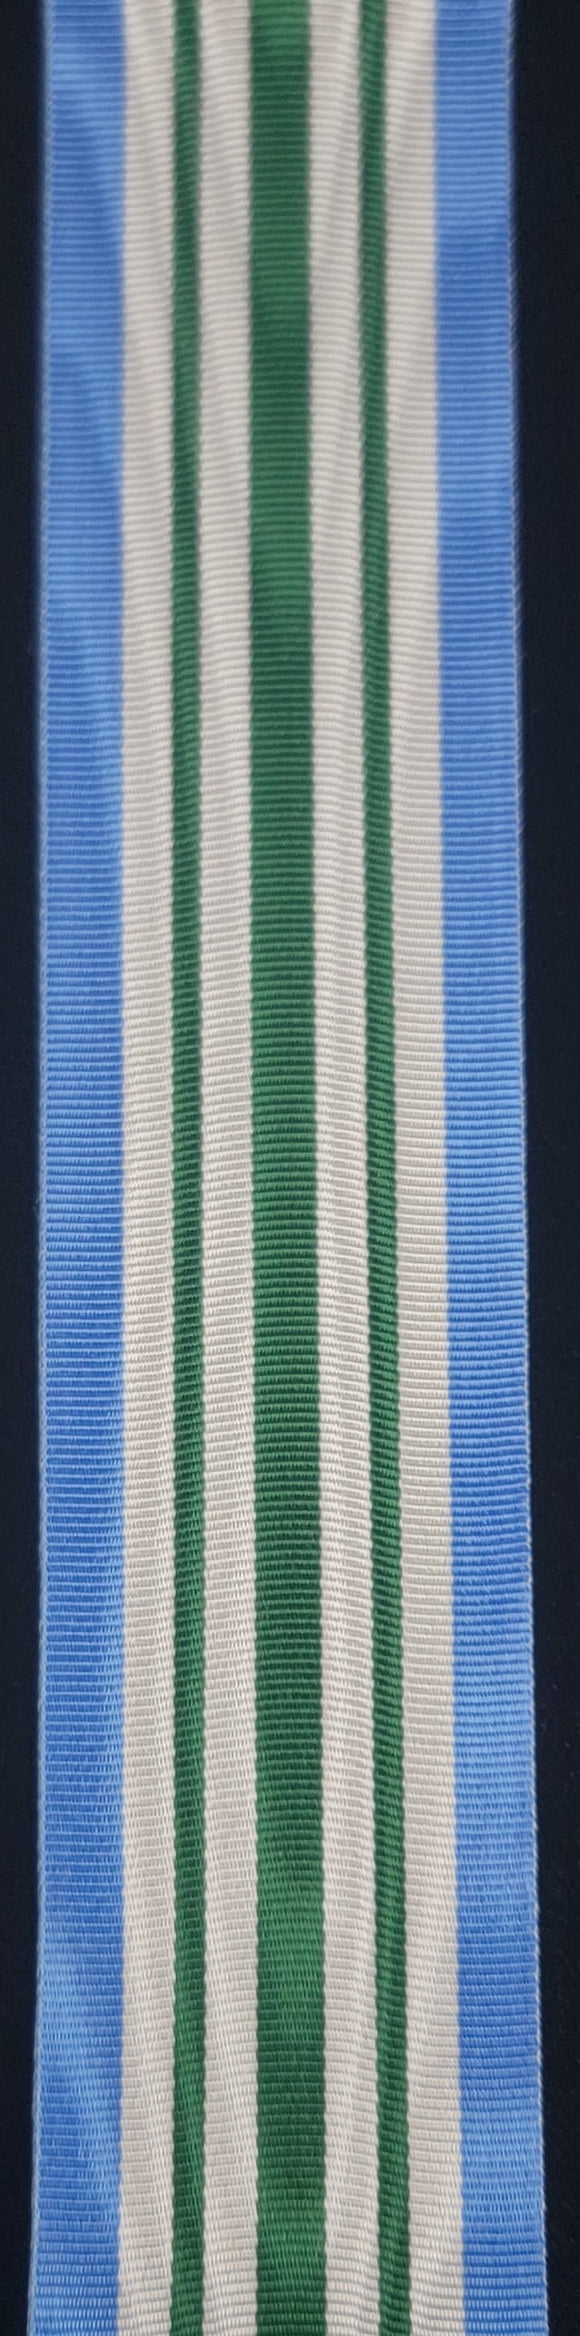 Ribbon, US Medal Joint Service Commendation Medal